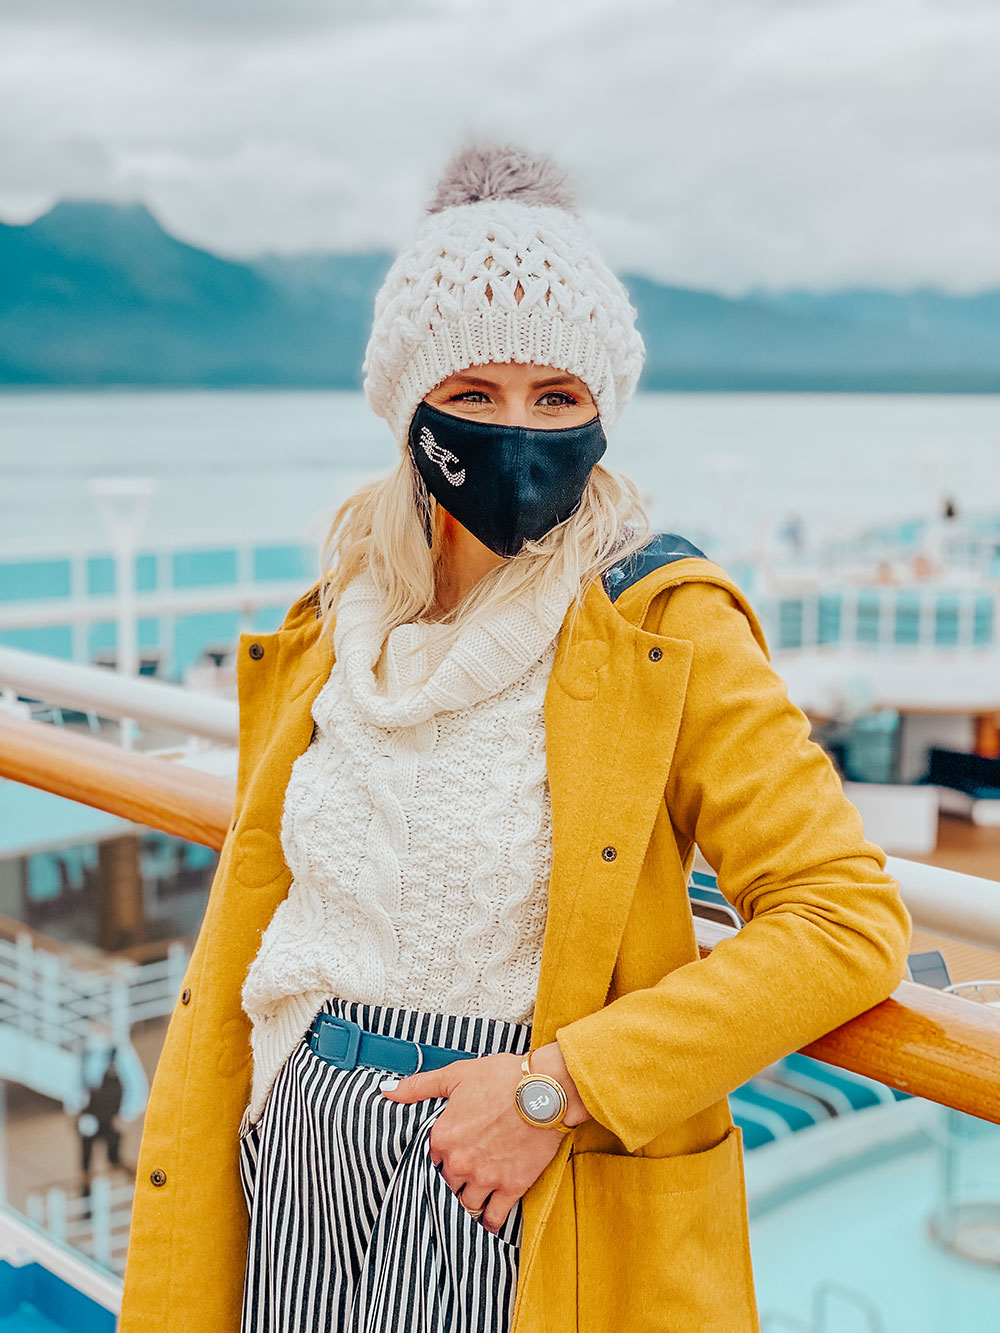 cruise ship covid safety - rule on wearing masks